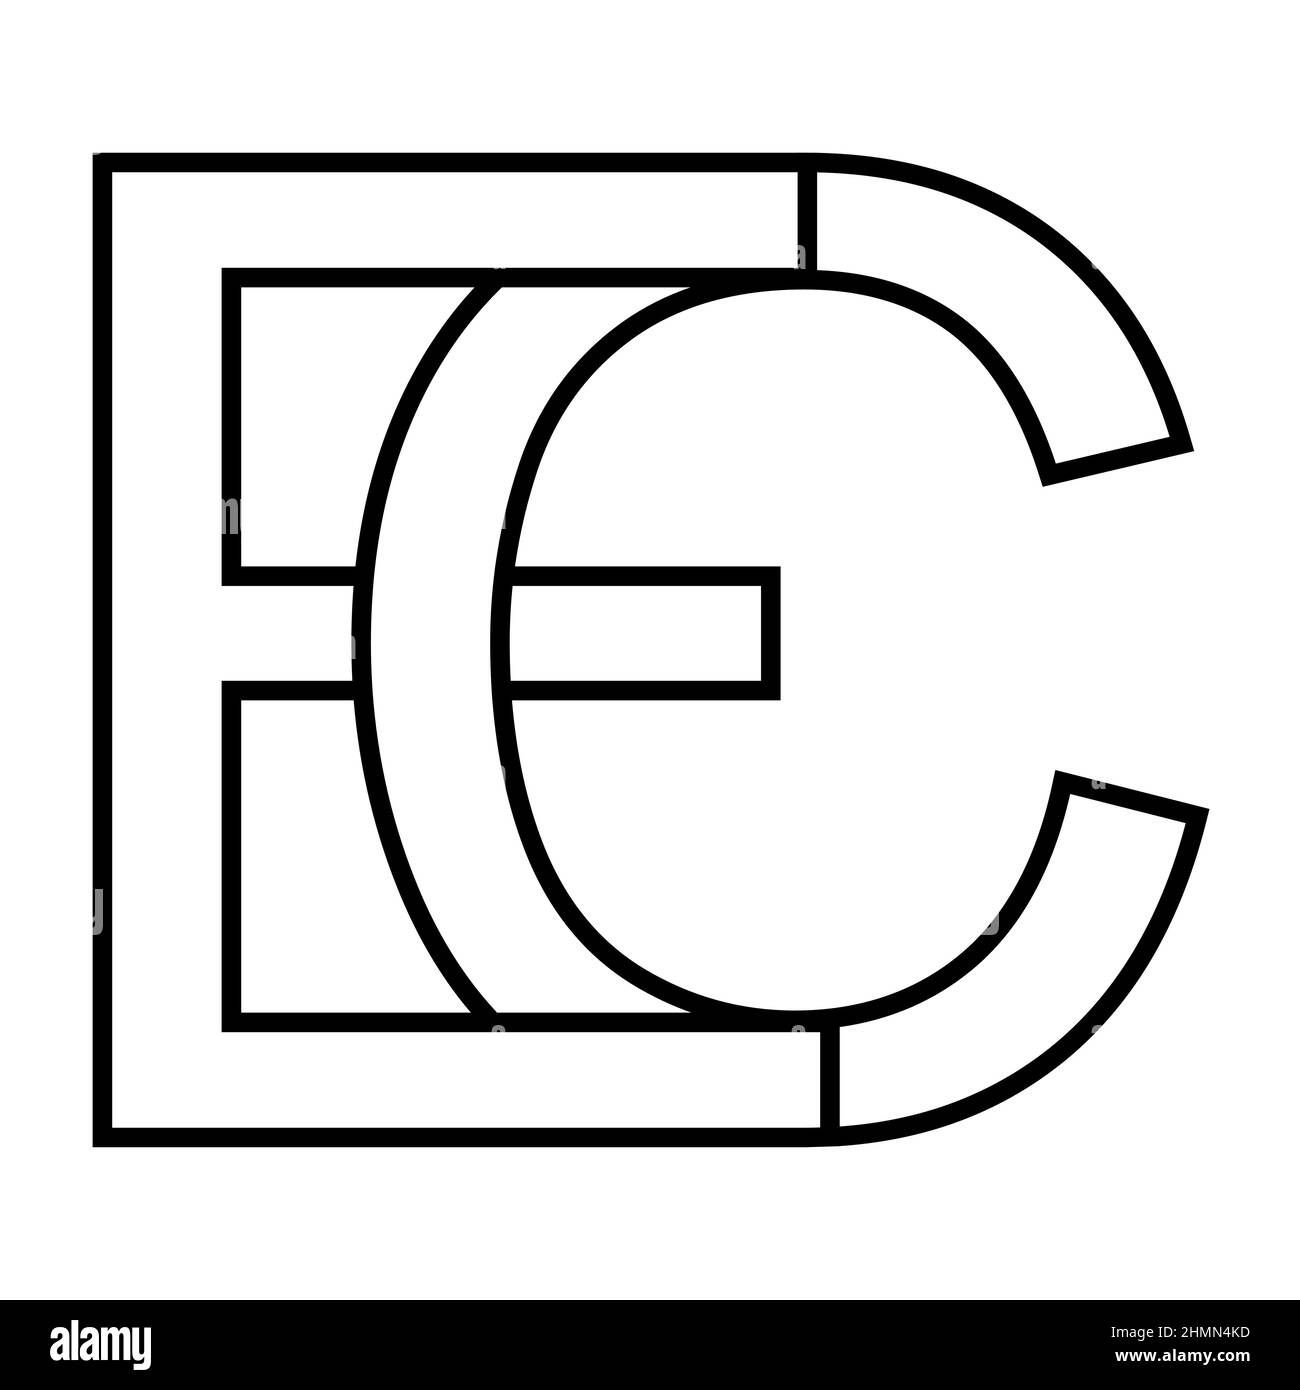 Logo-Zeichen ec ce, Symbol nft ec interlaced, Buchstaben e c Stock Vektor